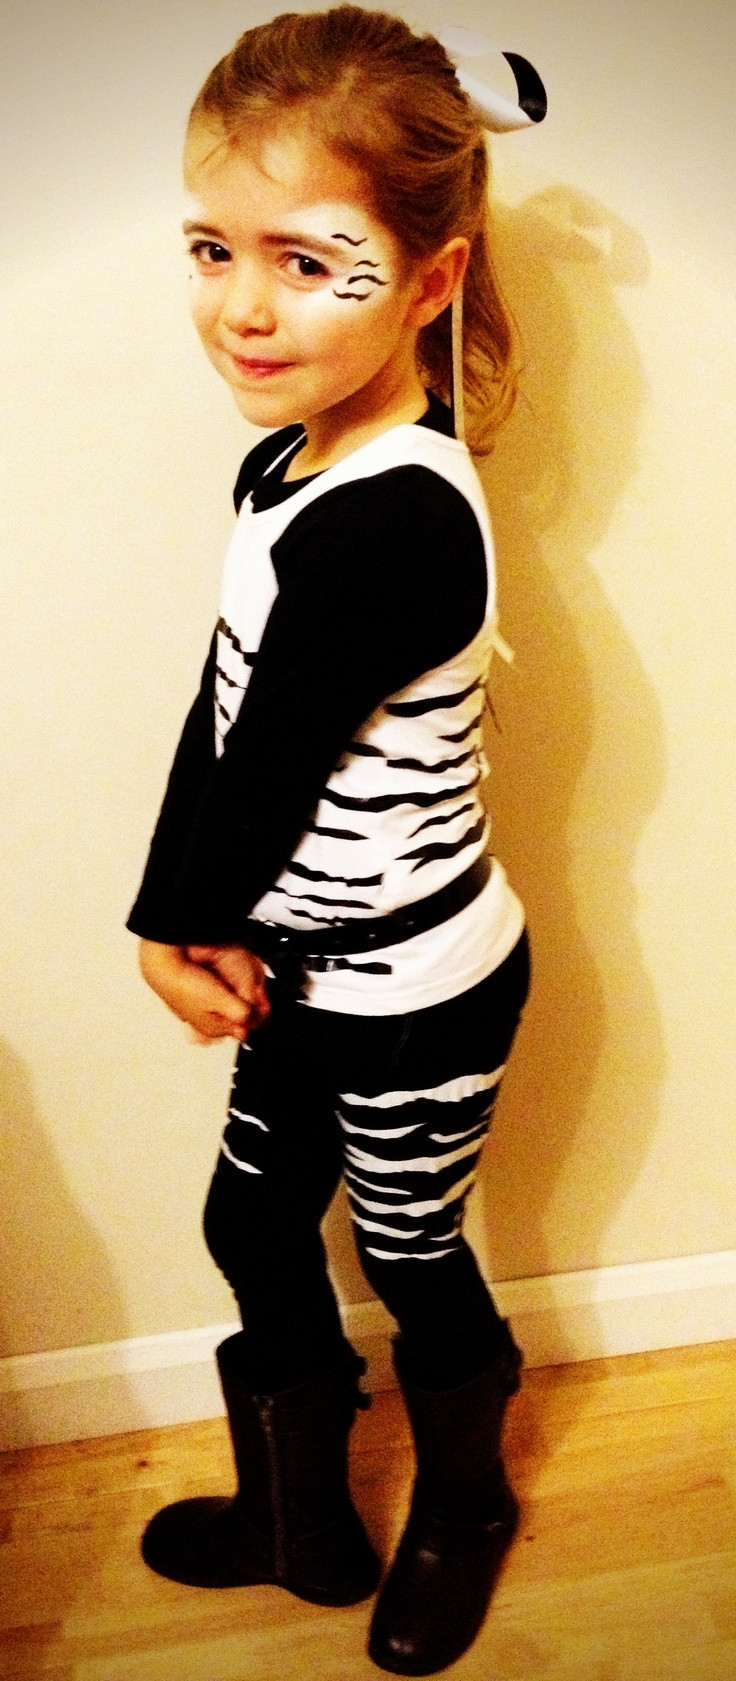 DIY Cheetah Costumes
 Best 25 Zebra costume ideas on Pinterest